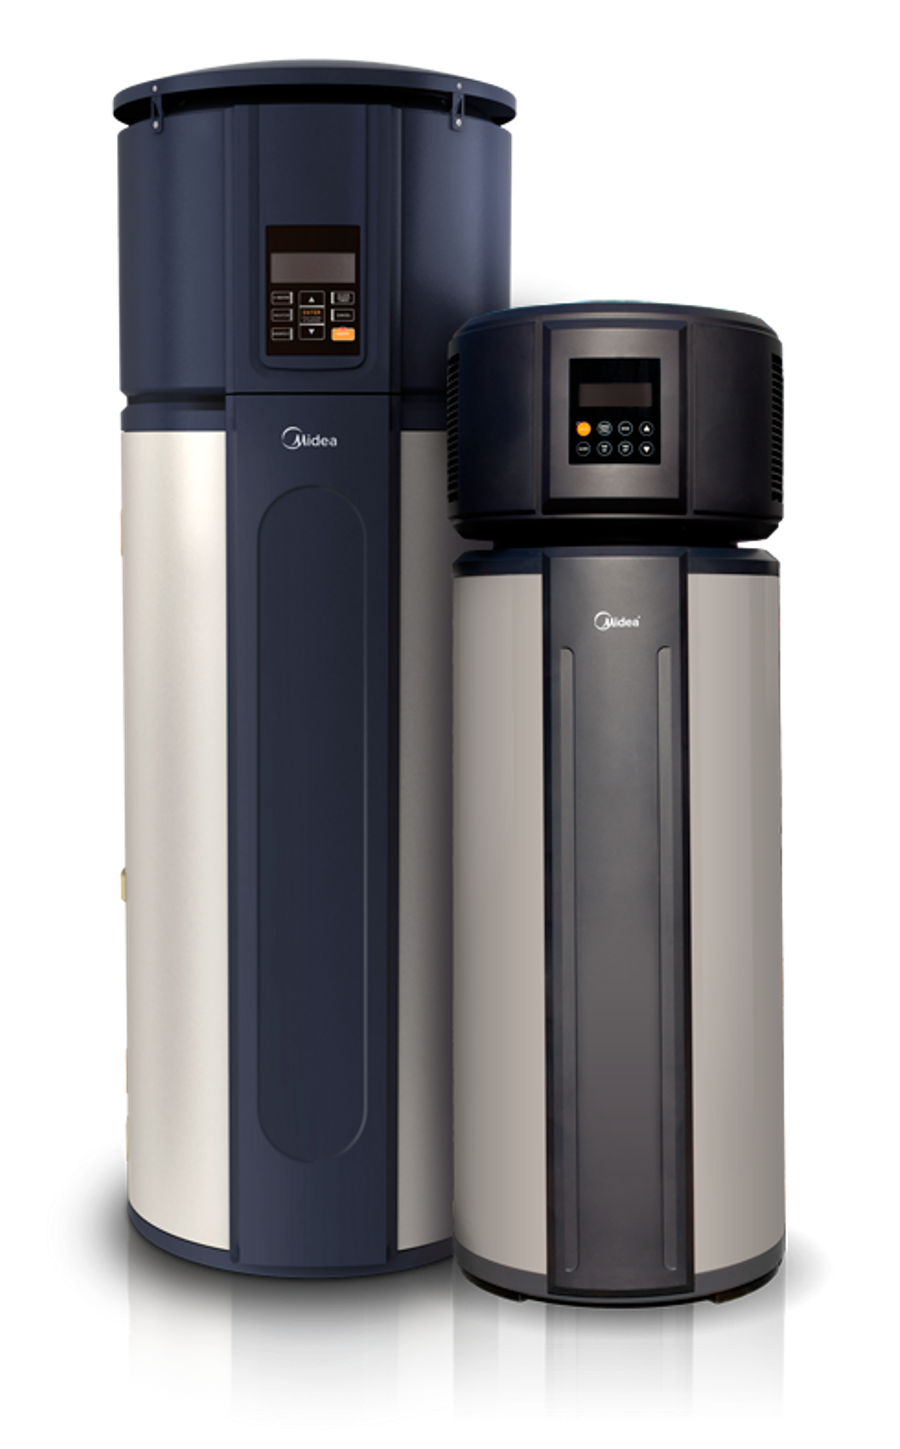 Chromagen Midea Heat Pump Hot Water System PRICE AFTER STC REBATE EBay